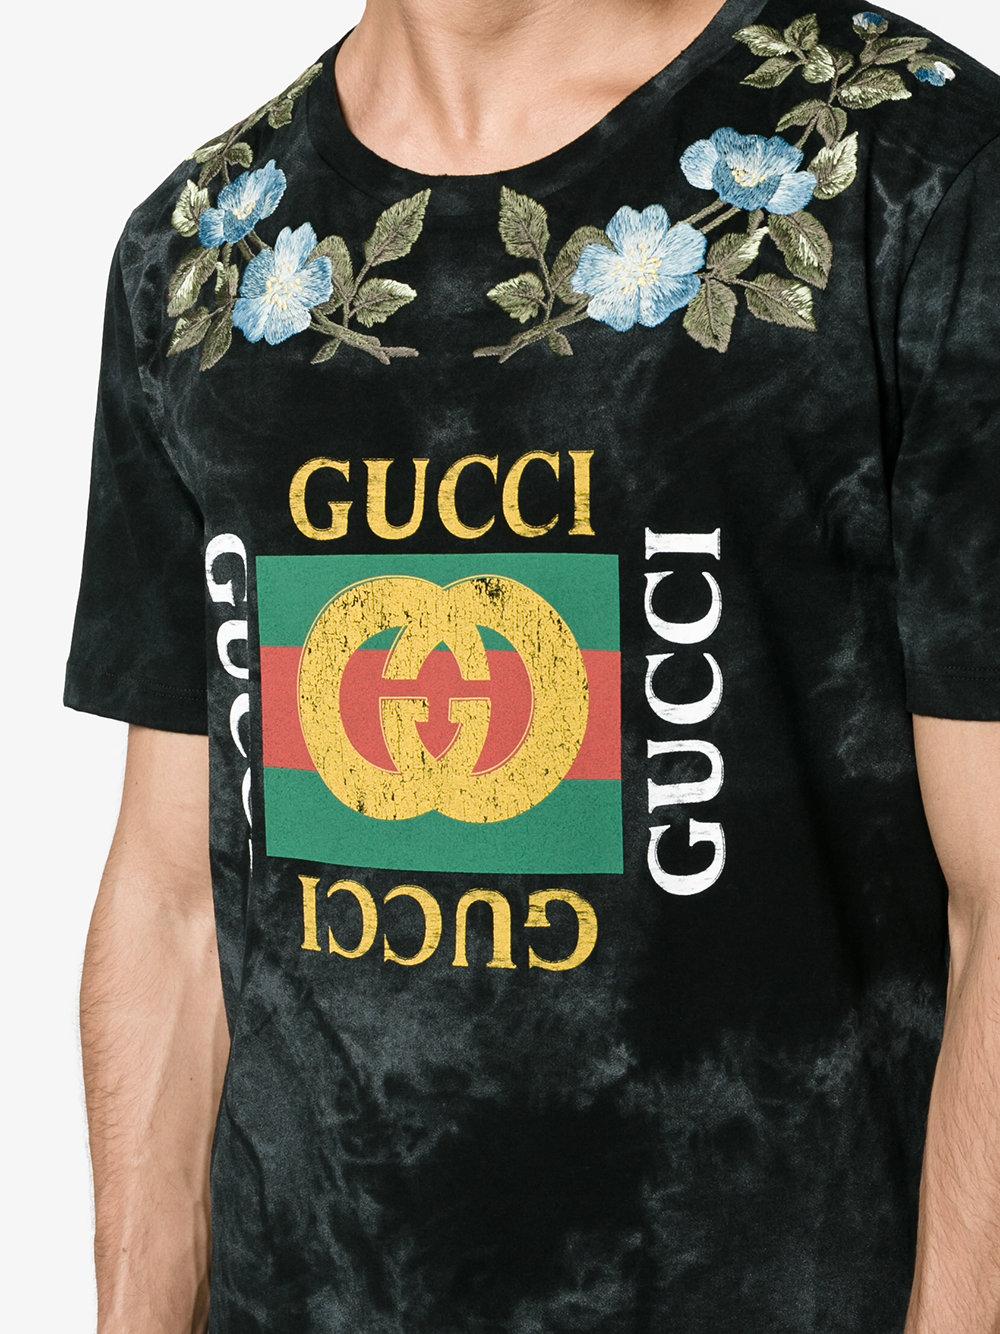 Gucci Cotton Fake Logo Tie Dye T-shirt in Black for Men - Lyst